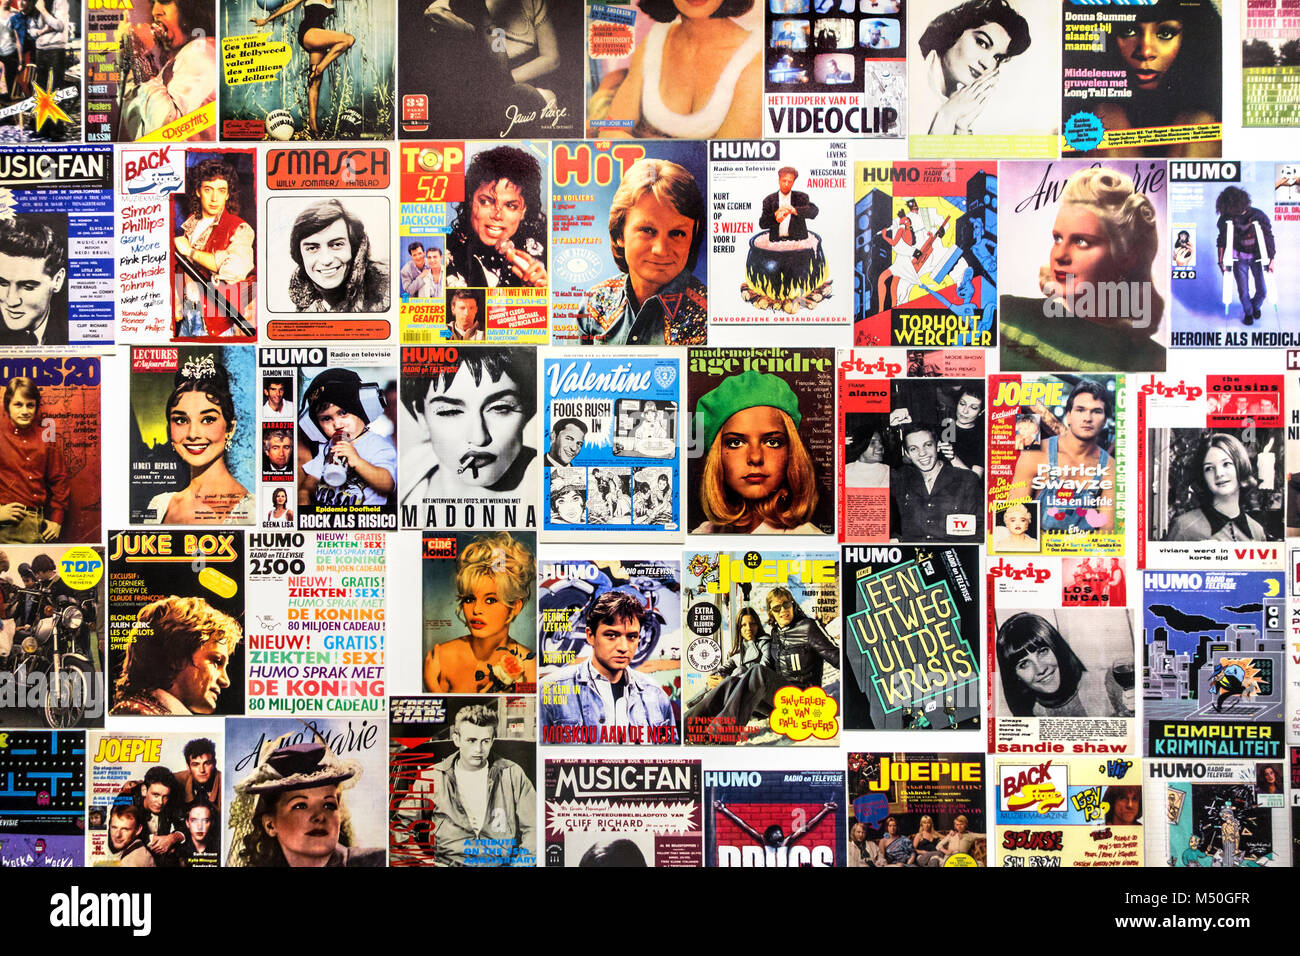 Colección de antiguas portadas de revistas internacionales de música / supermercado tabloides Foto de stock